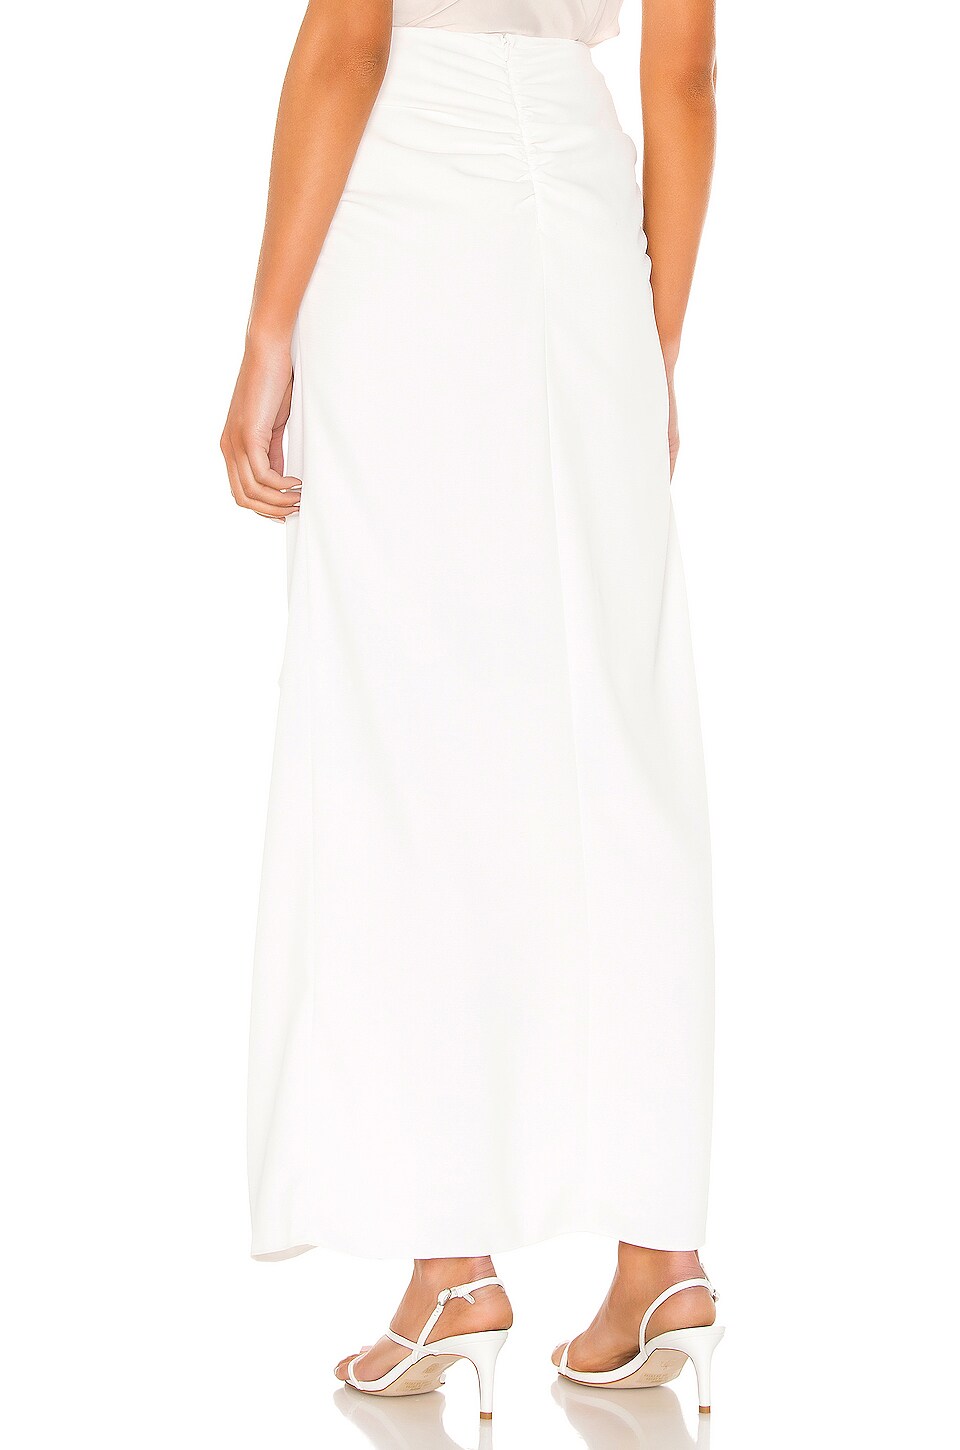 L'Academie The Rachela Maxi Skirt in White | REVOLVE